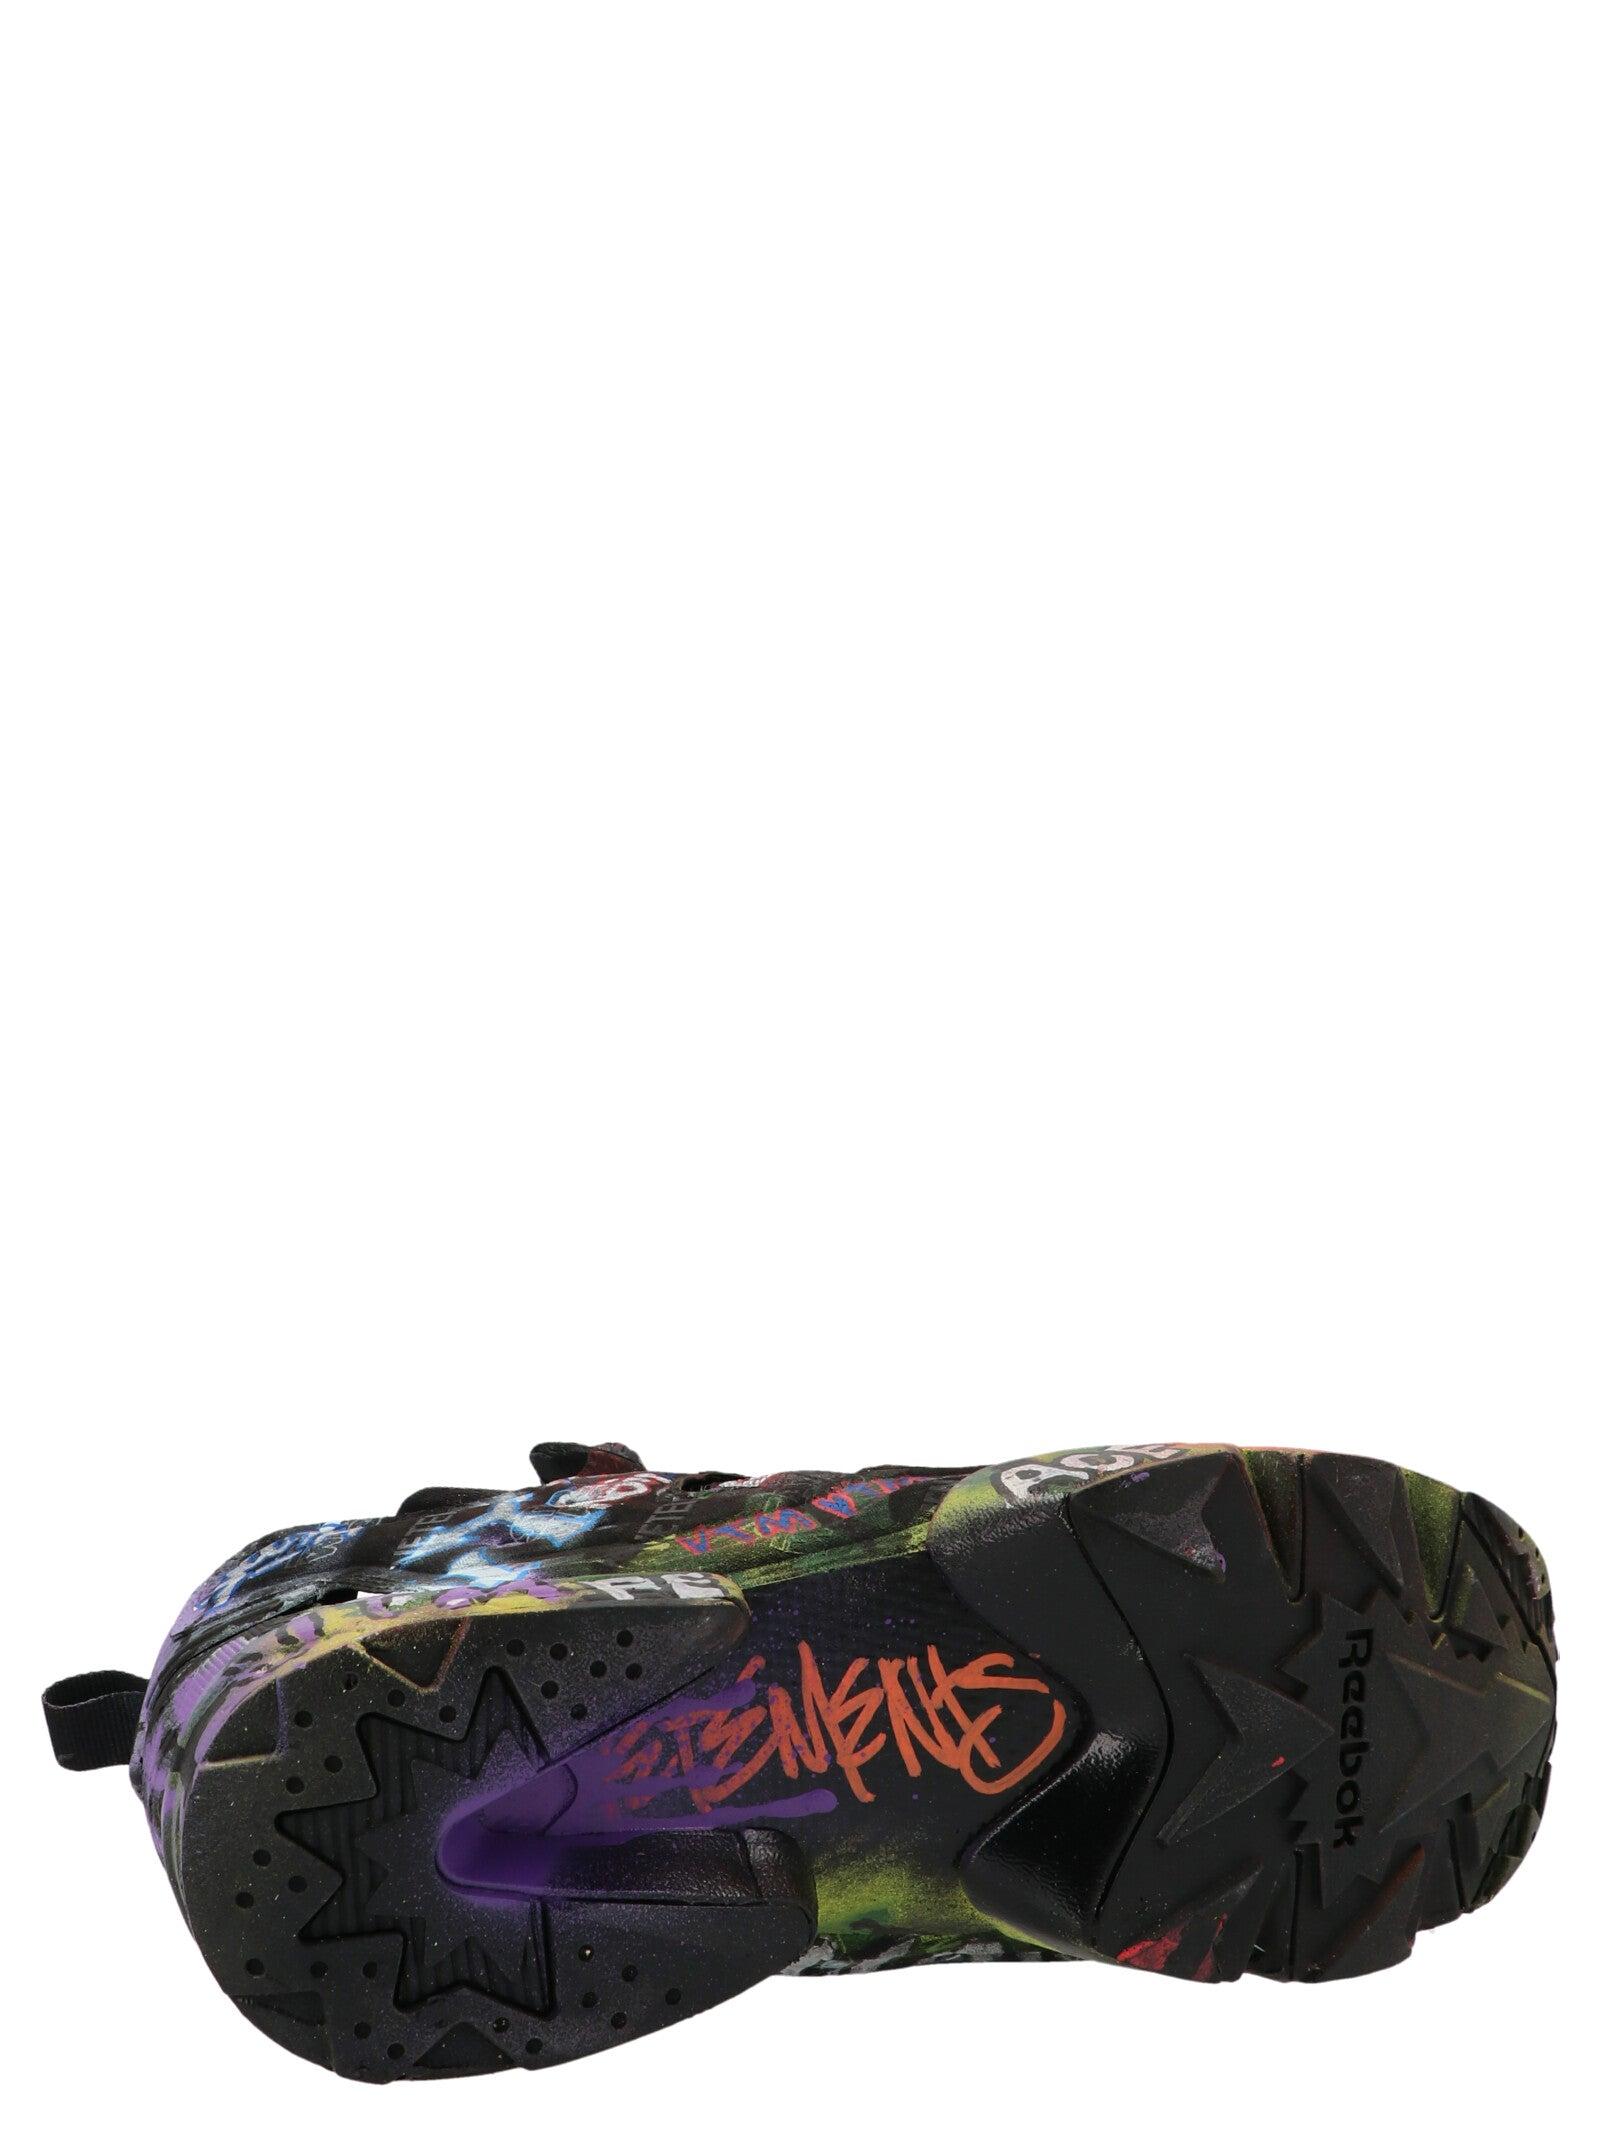 Graffiti Hand Painted Instapump Fury X Reebok Sneakers |